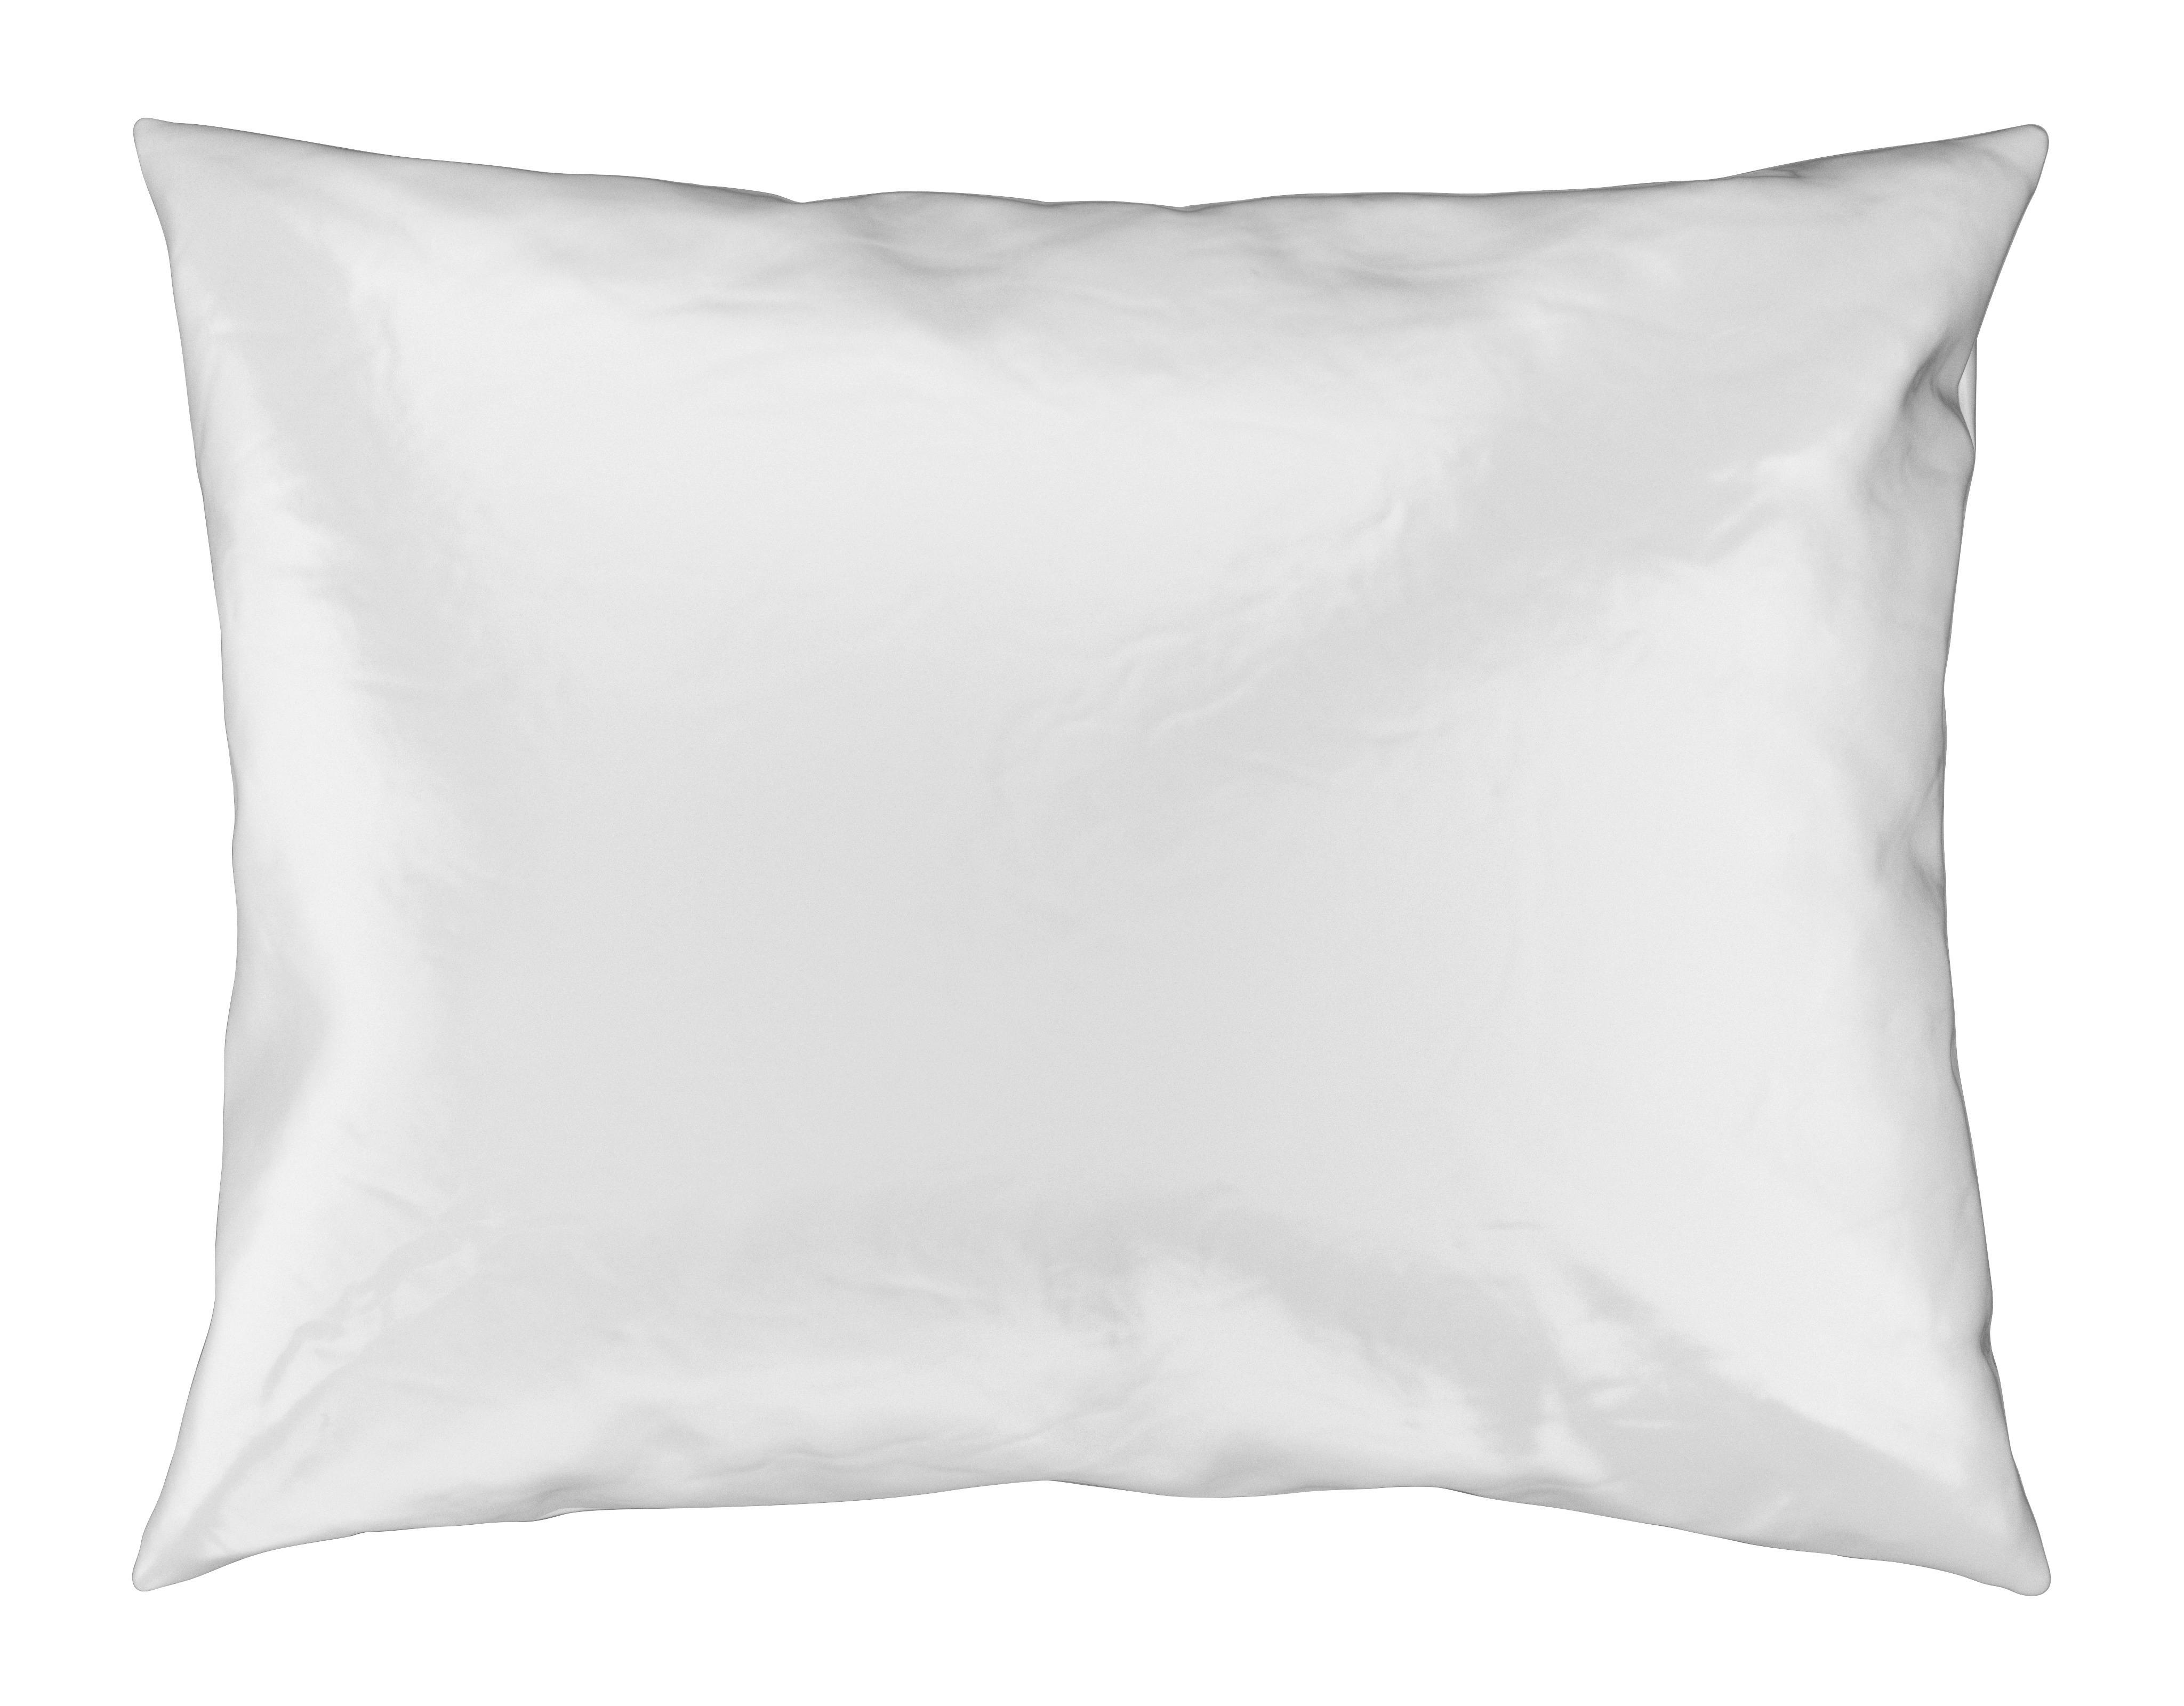 Kissenhülle Alex Uni in Weiß ca. 40x60cm - Weiß, MODERN, Textil (40/60cm) - Premium Living